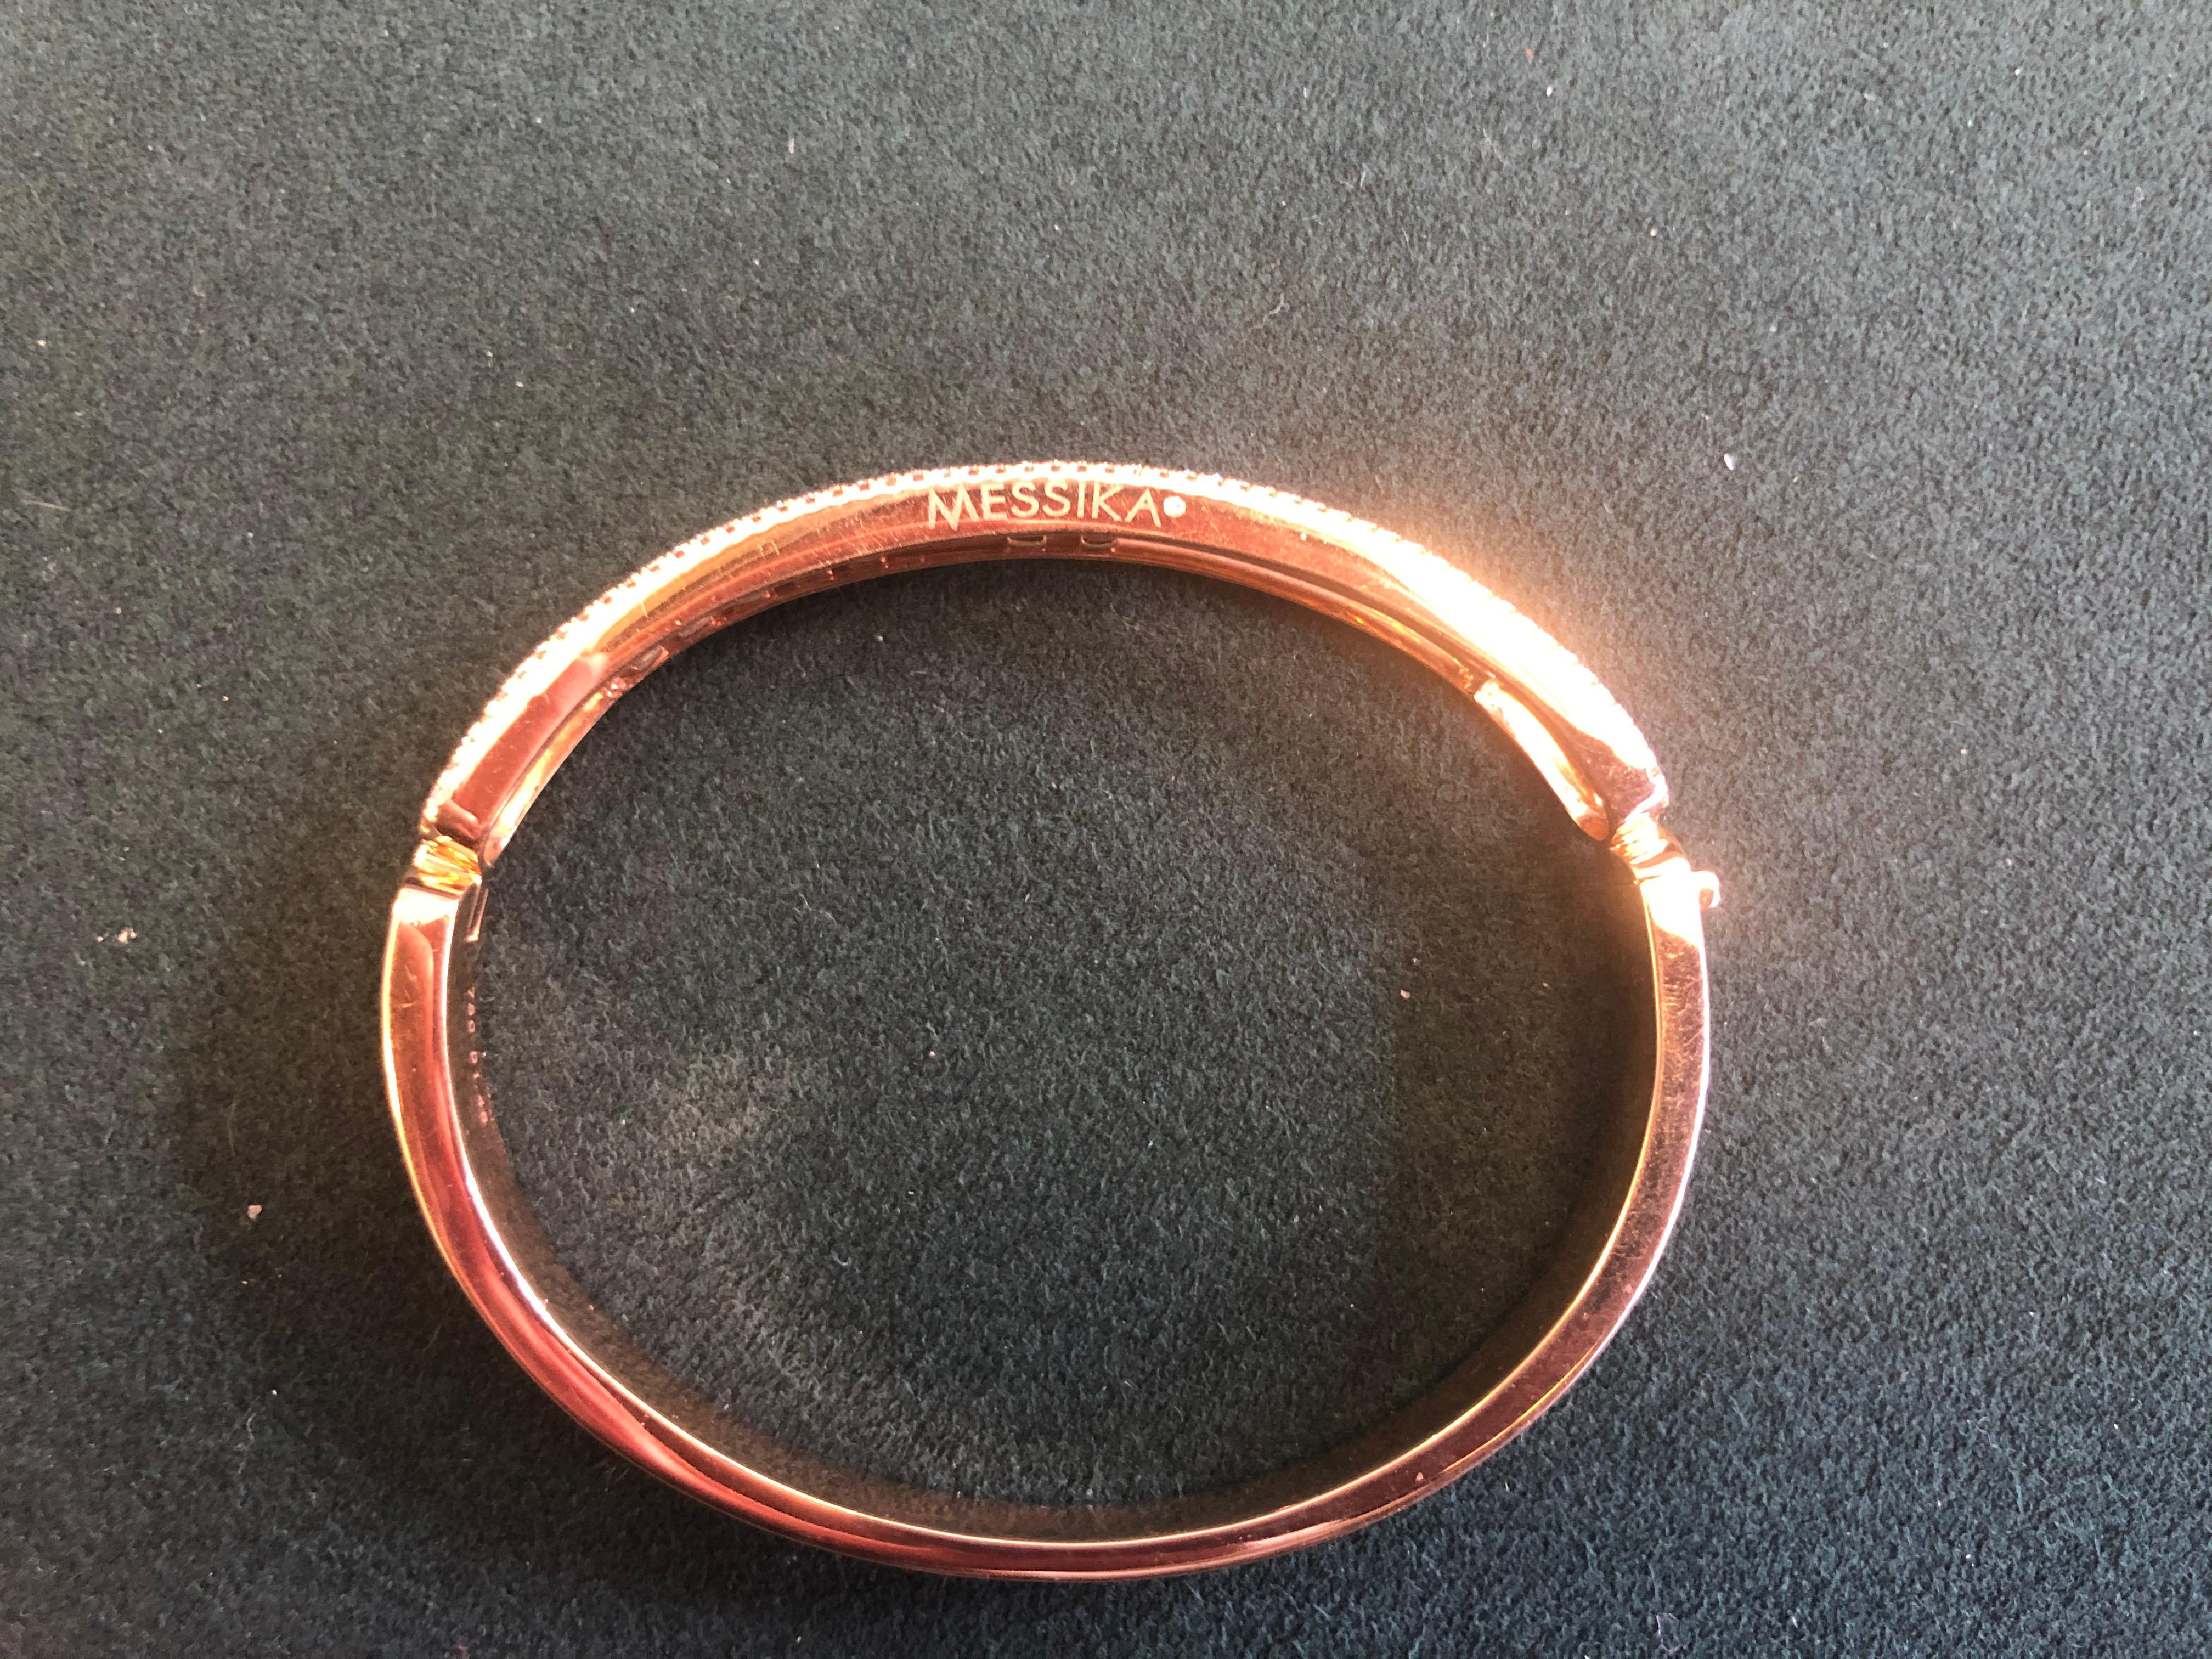 Round Cut Messika Move Semainier Bracelet in 18 Karat Pink Gold Set with Diamonds